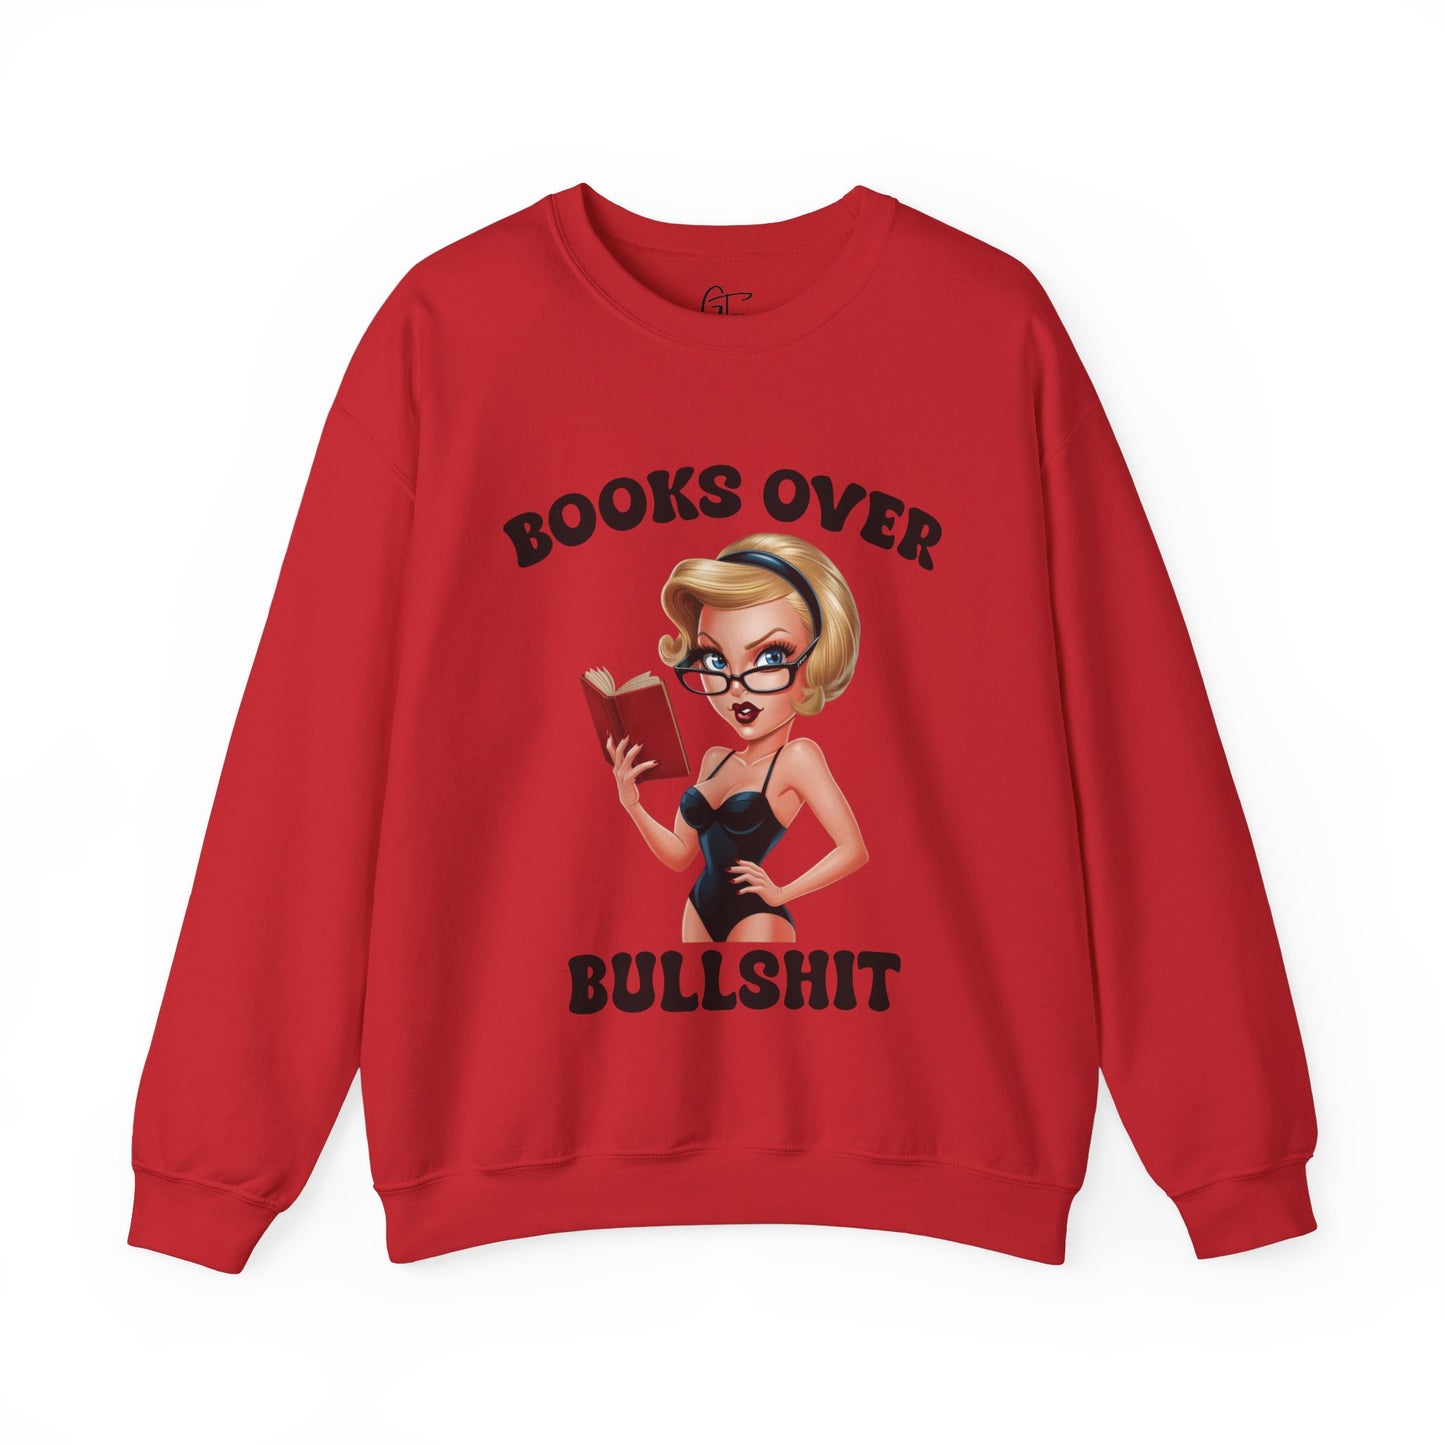 Books over Bullshit Sweatshirt